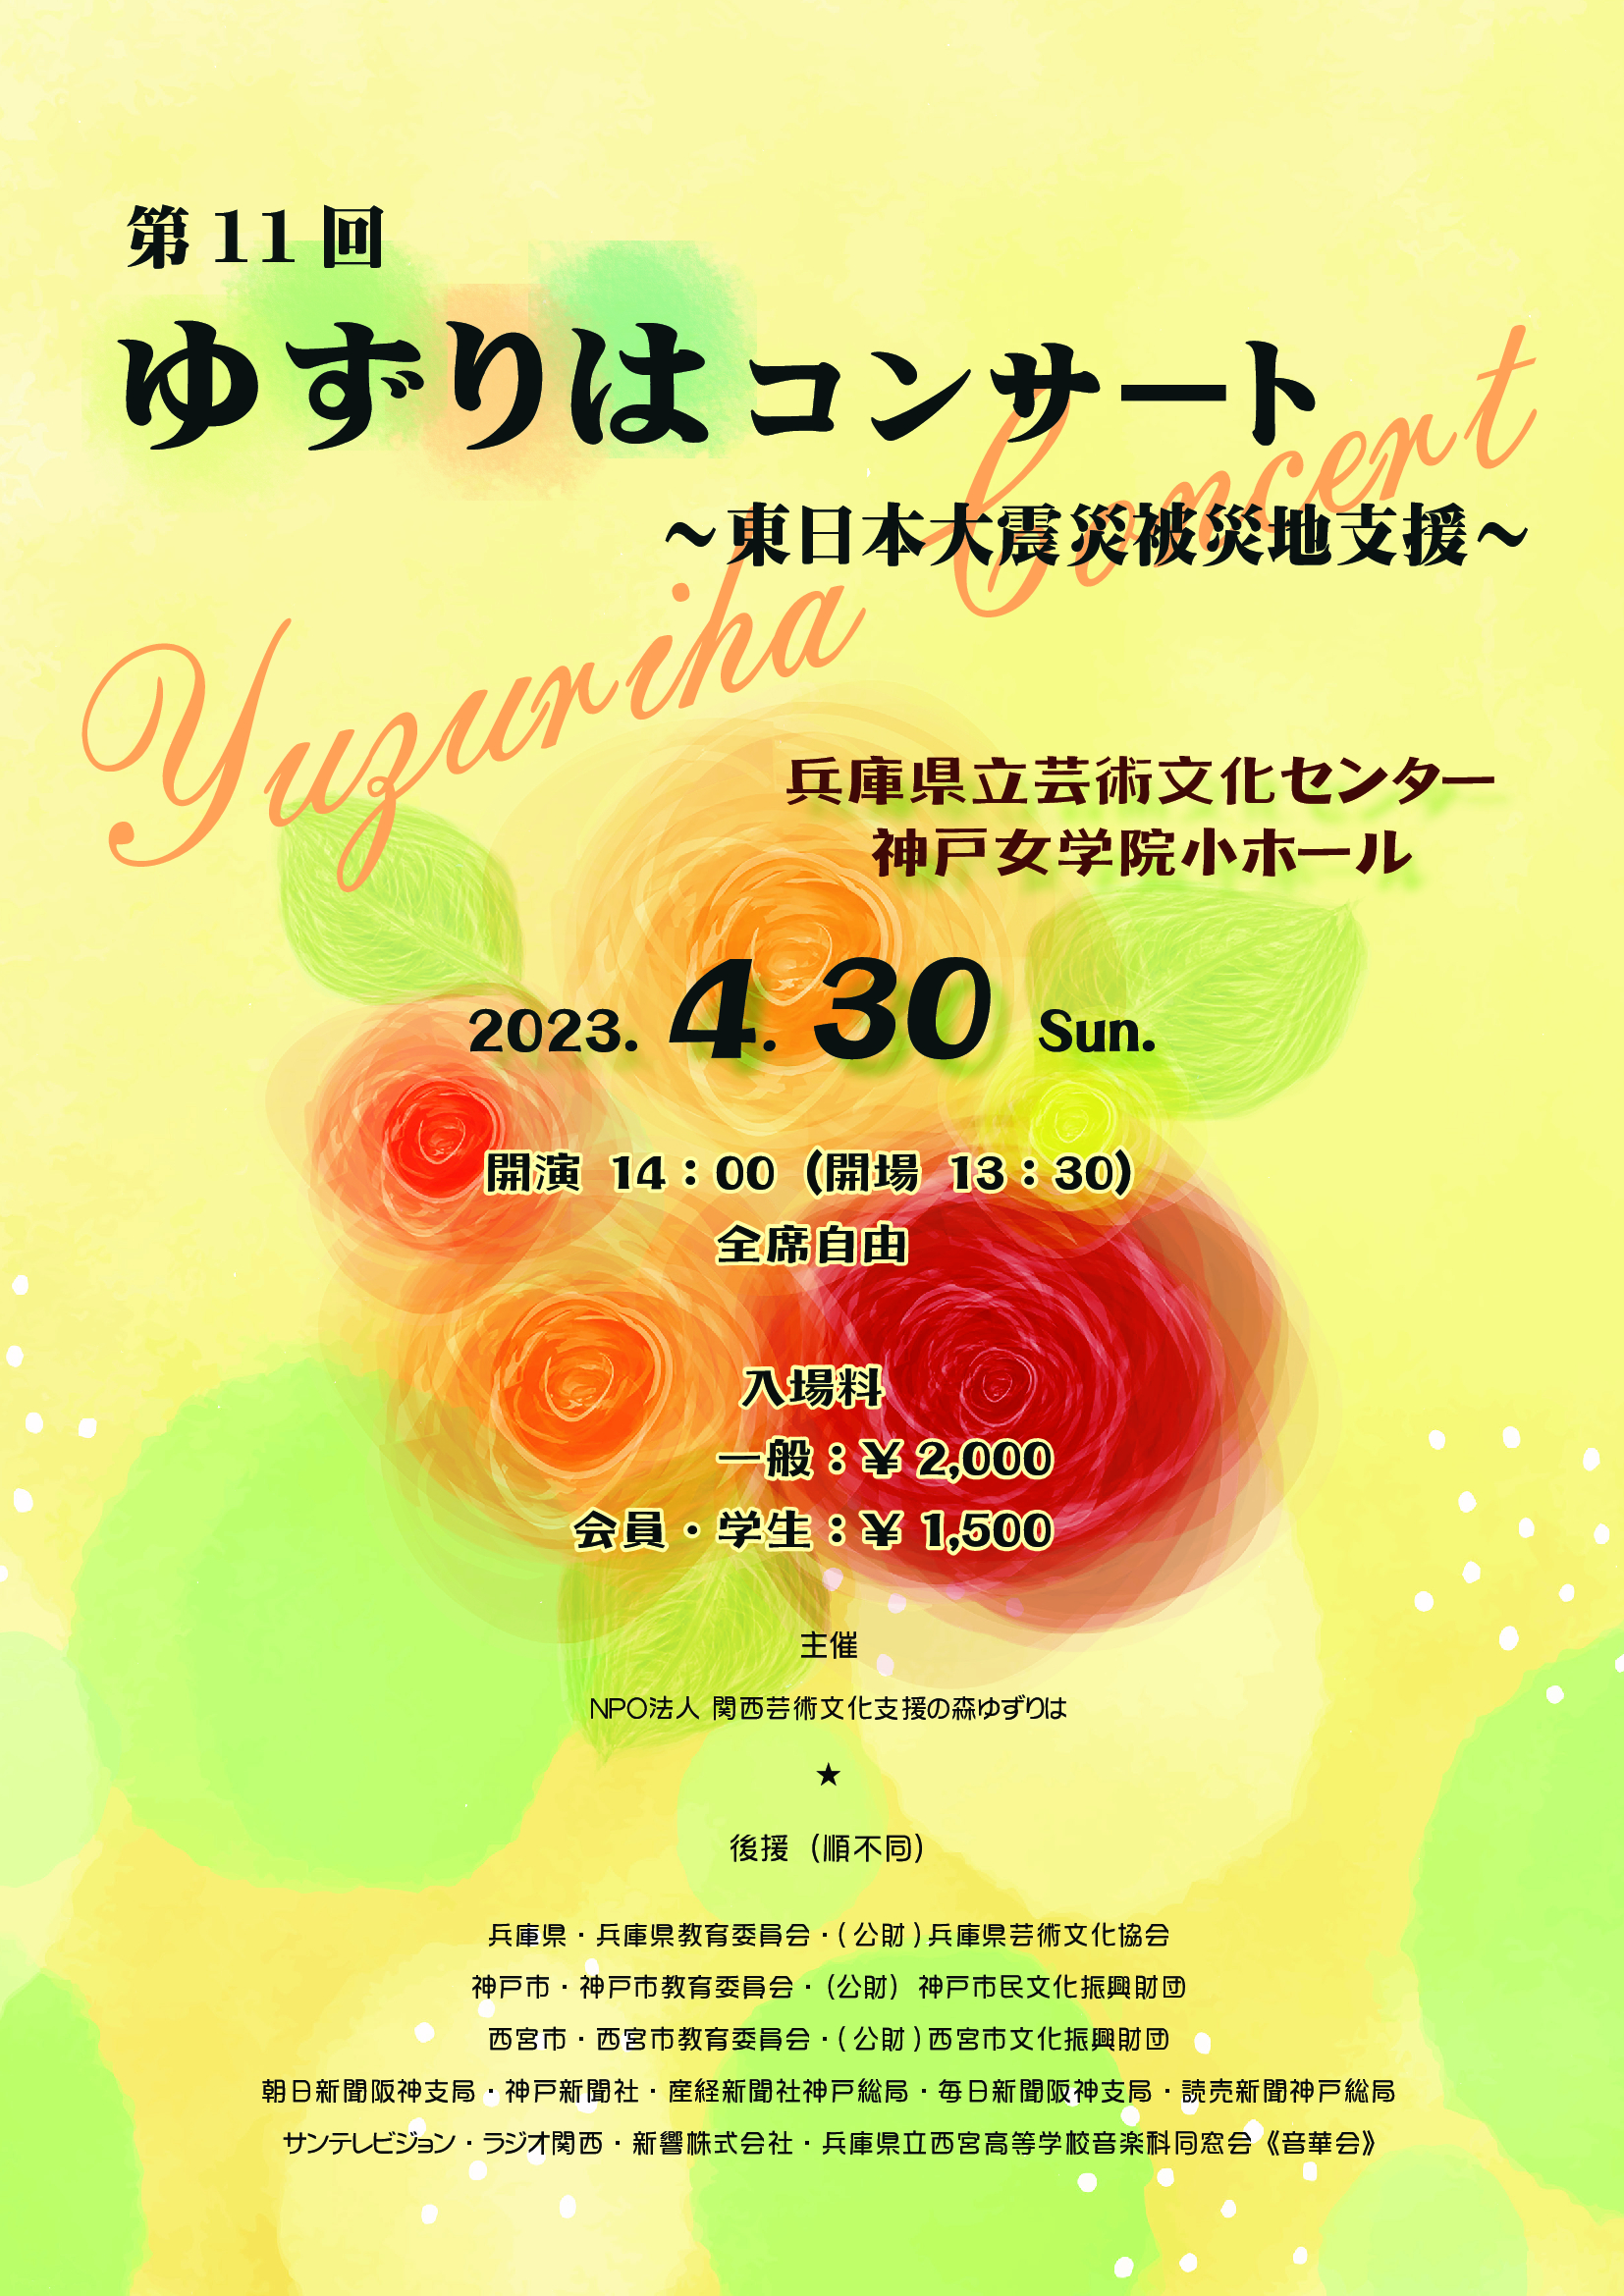 The 11th Yuzuriha Concert